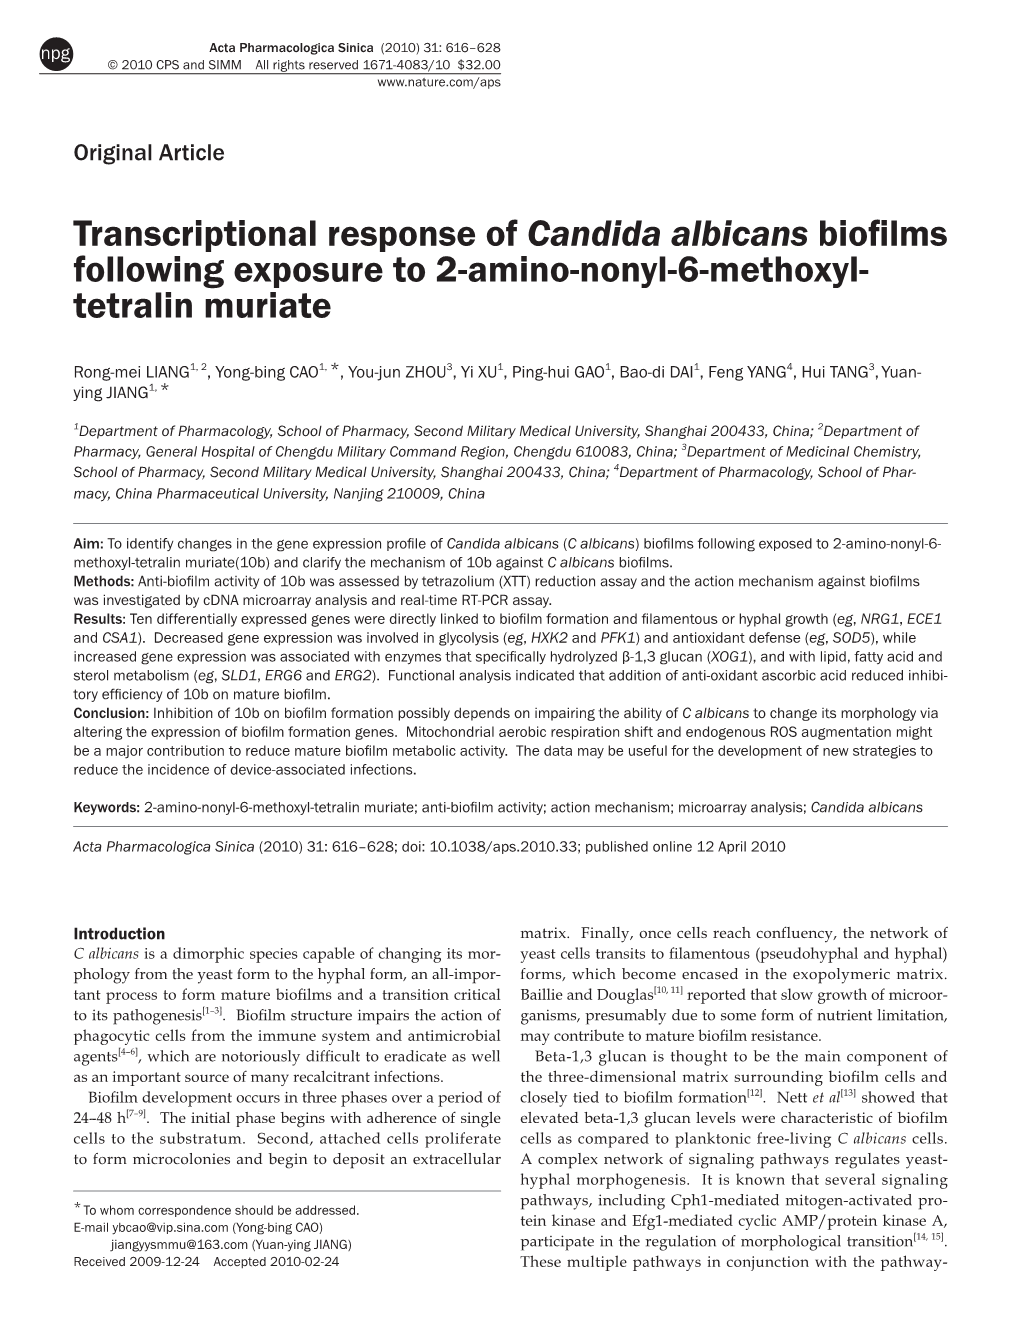 Candida Albicans Biofilms Following Exposure to 2-Amino-Nonyl-6-Methoxyl- Tetralin Muriate